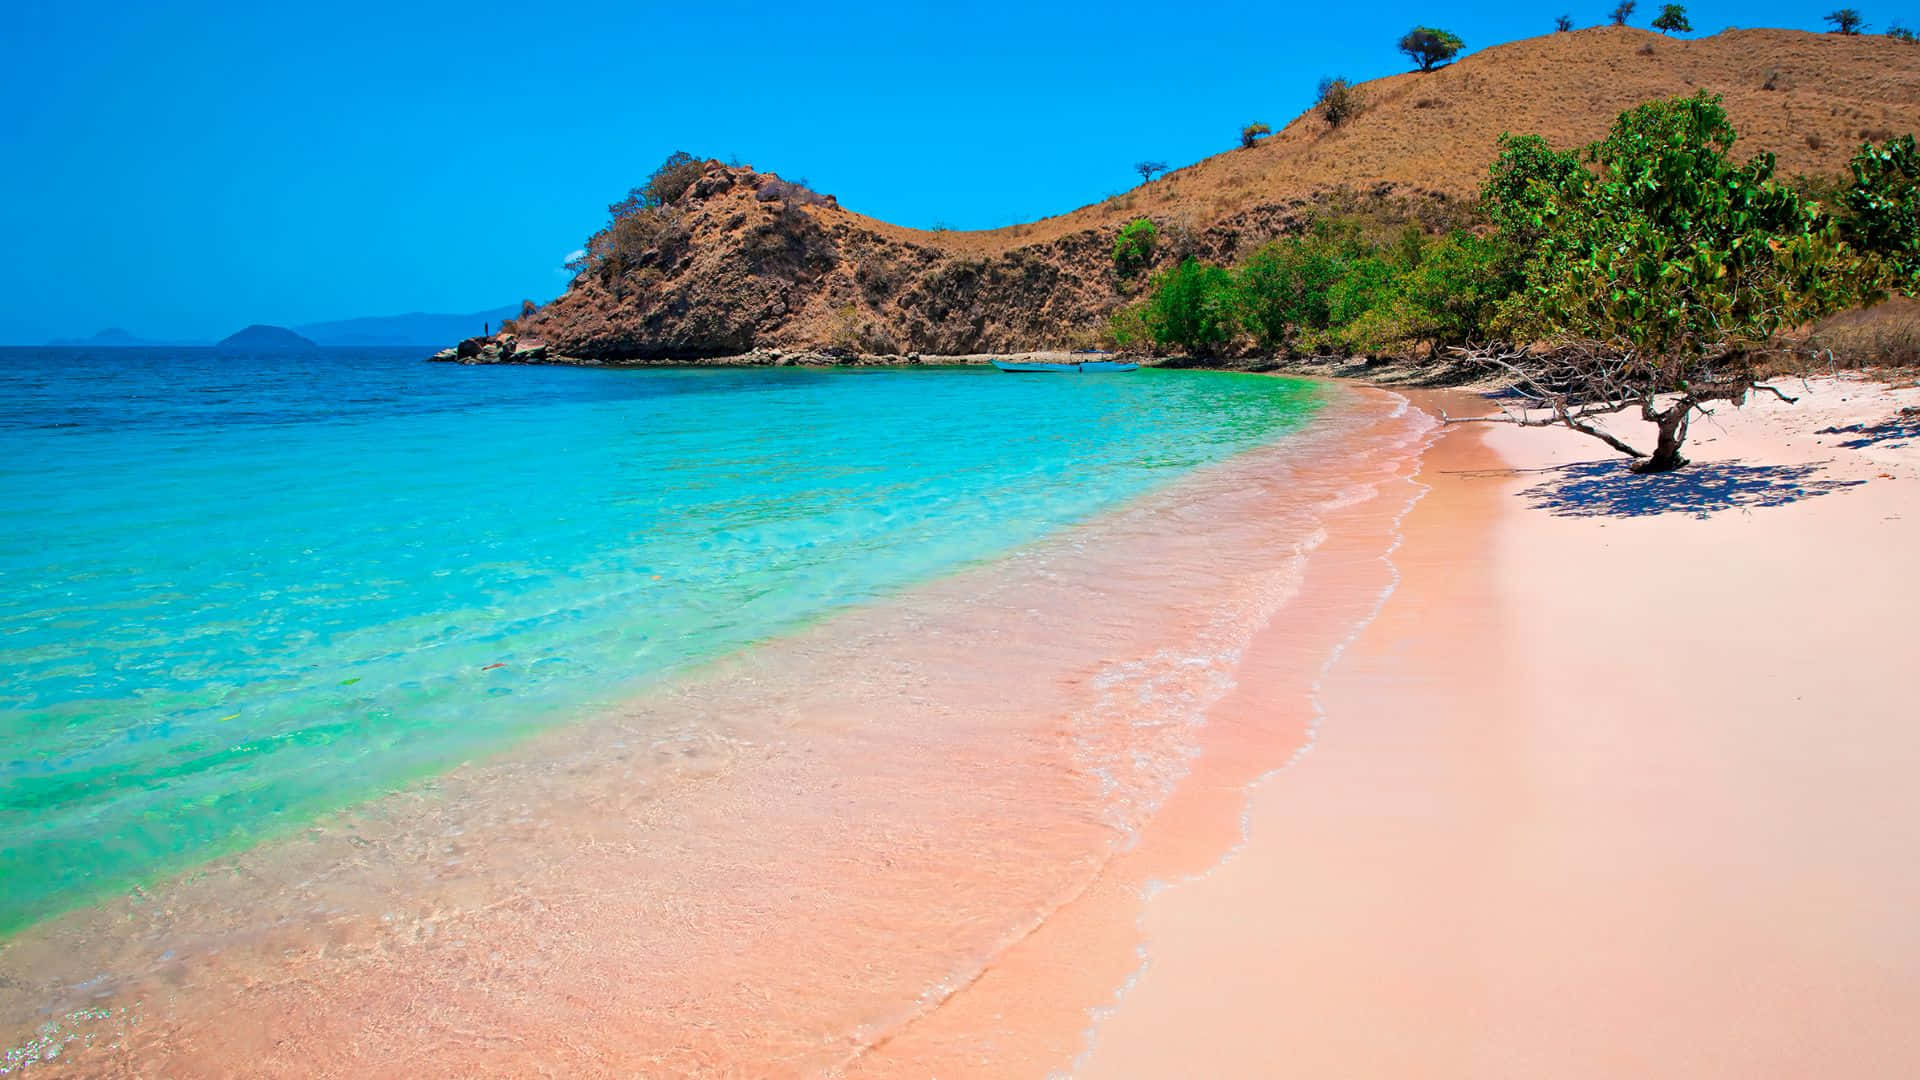 Impresionantepaisaje De Playa En Tonos Rosados. Fondo de pantalla